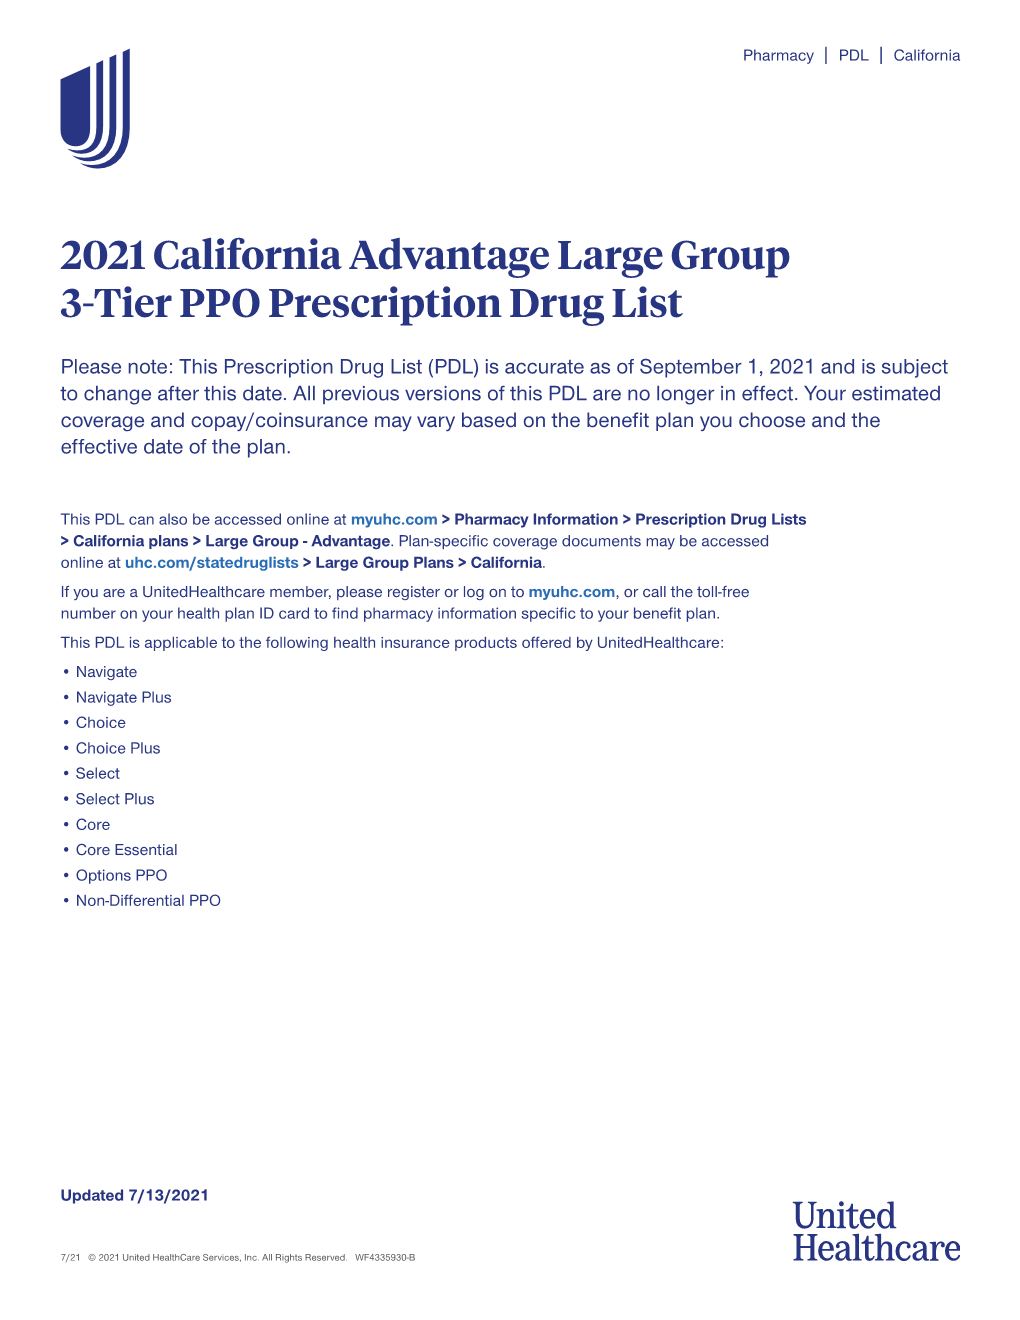 September 2021 California Advantage Large Group 3-Tier PPO Prescription Drug List – CDI Version